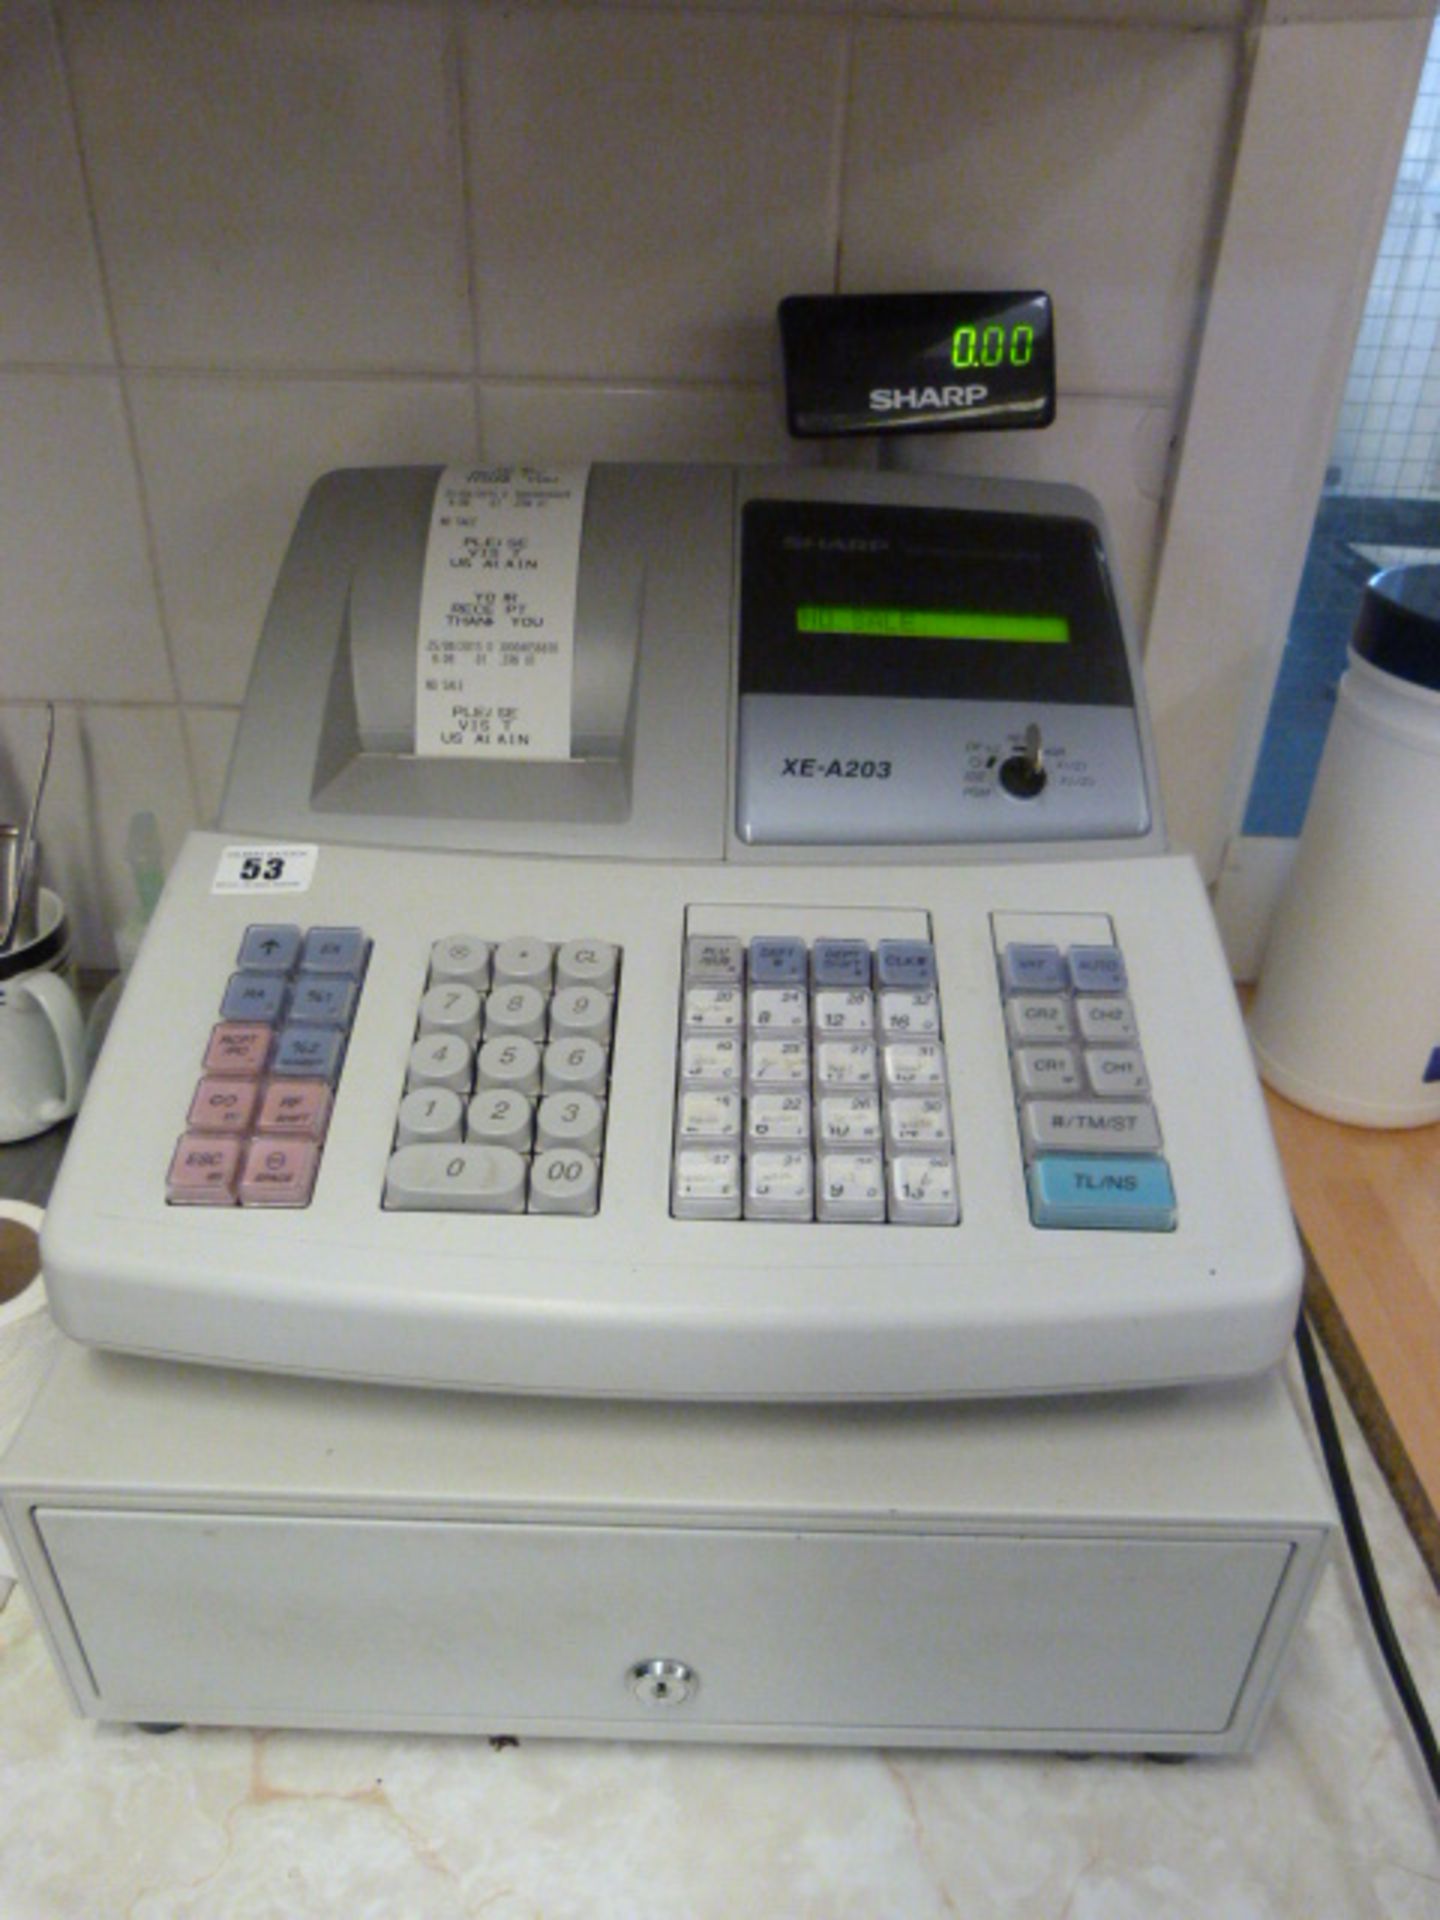 Sharp Electronic Cash Register Model XE-A203